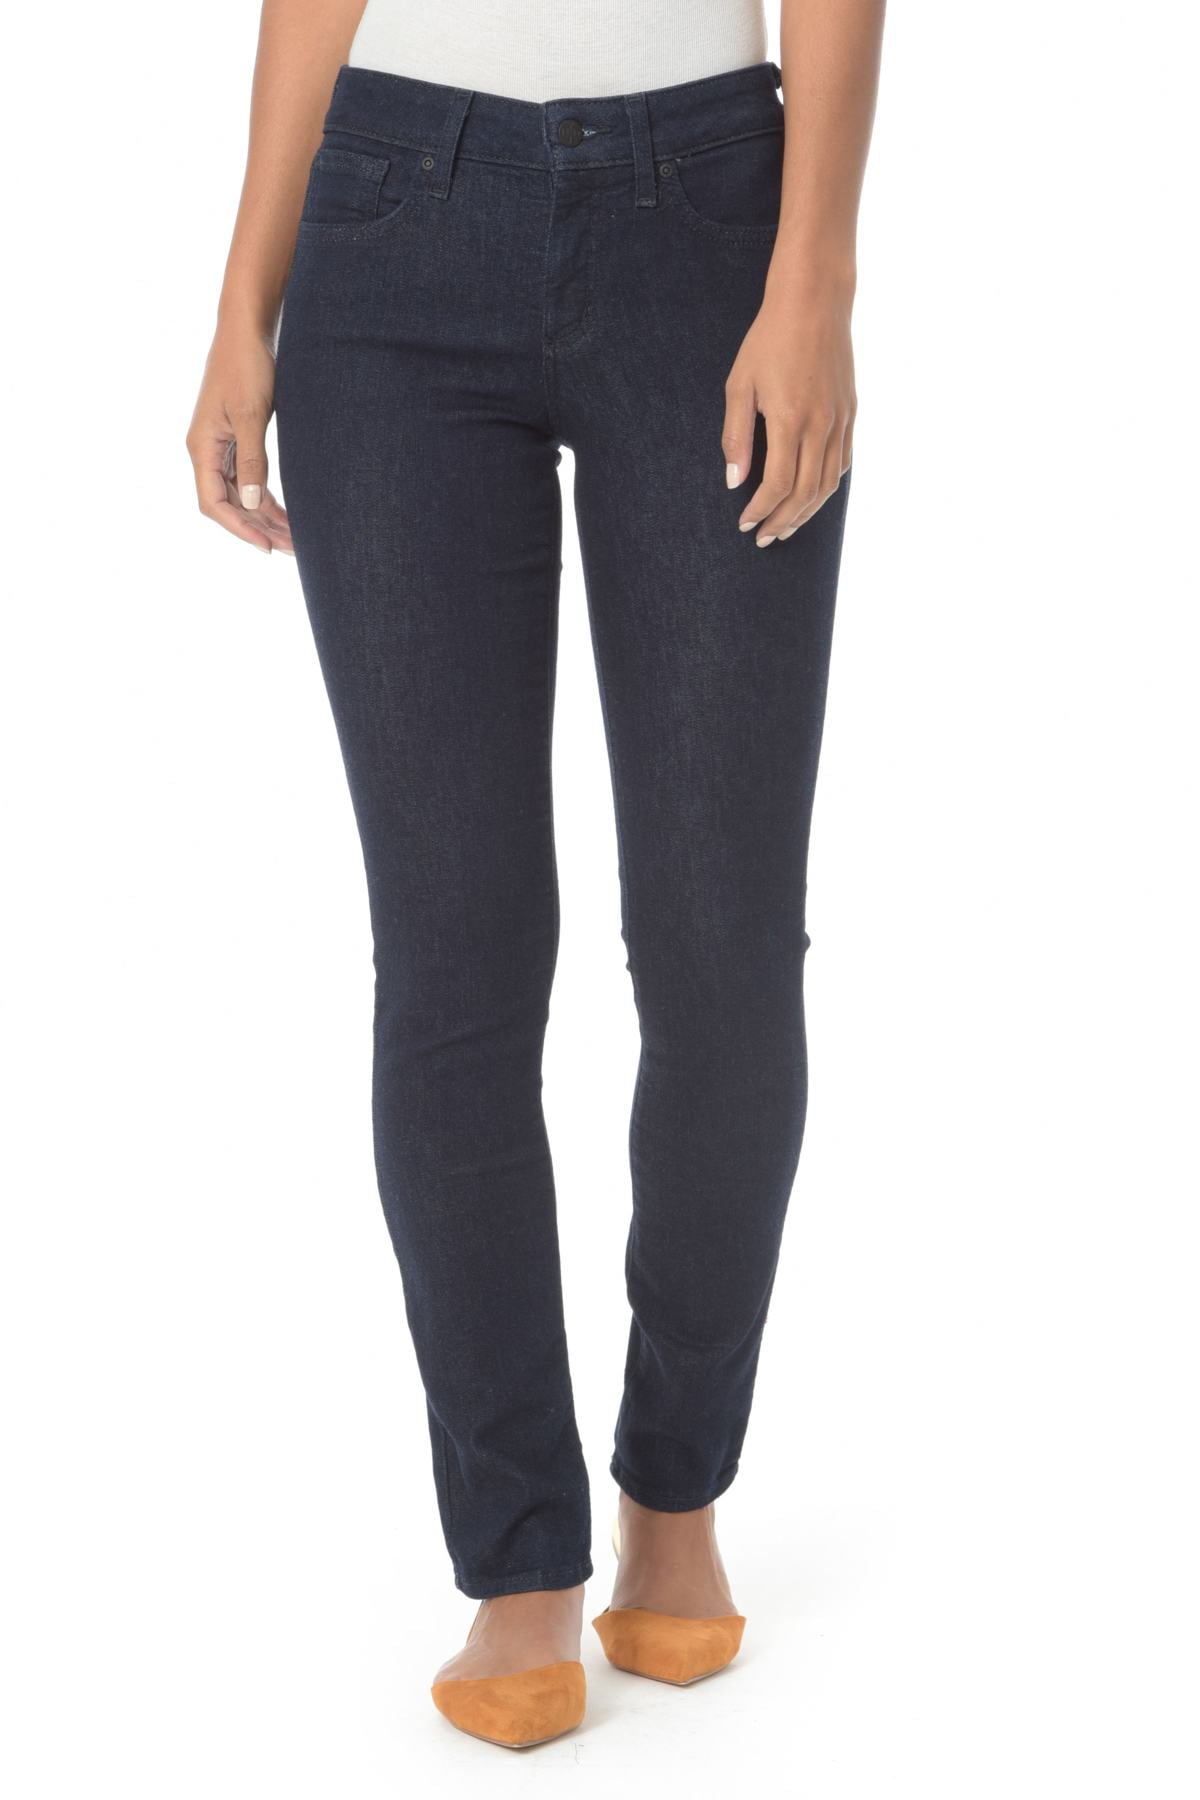 NYDJ - Womens Jeans Petite Stretch Alina Legging Skinny 10P - Walmart ...